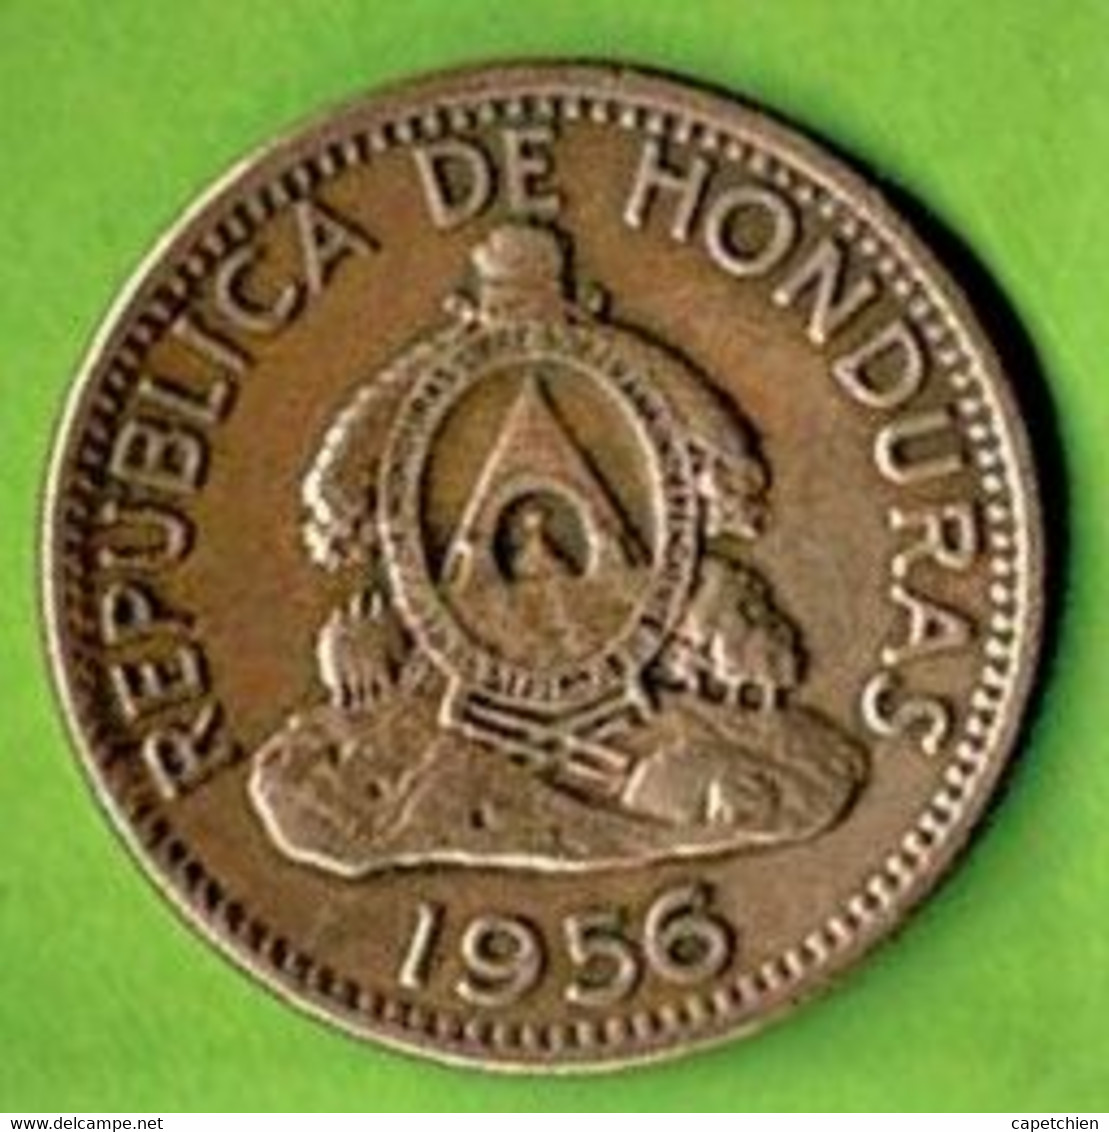 HONDURAS / 2 CENTAVOS DE LEMPIRA / 1956 - Honduras